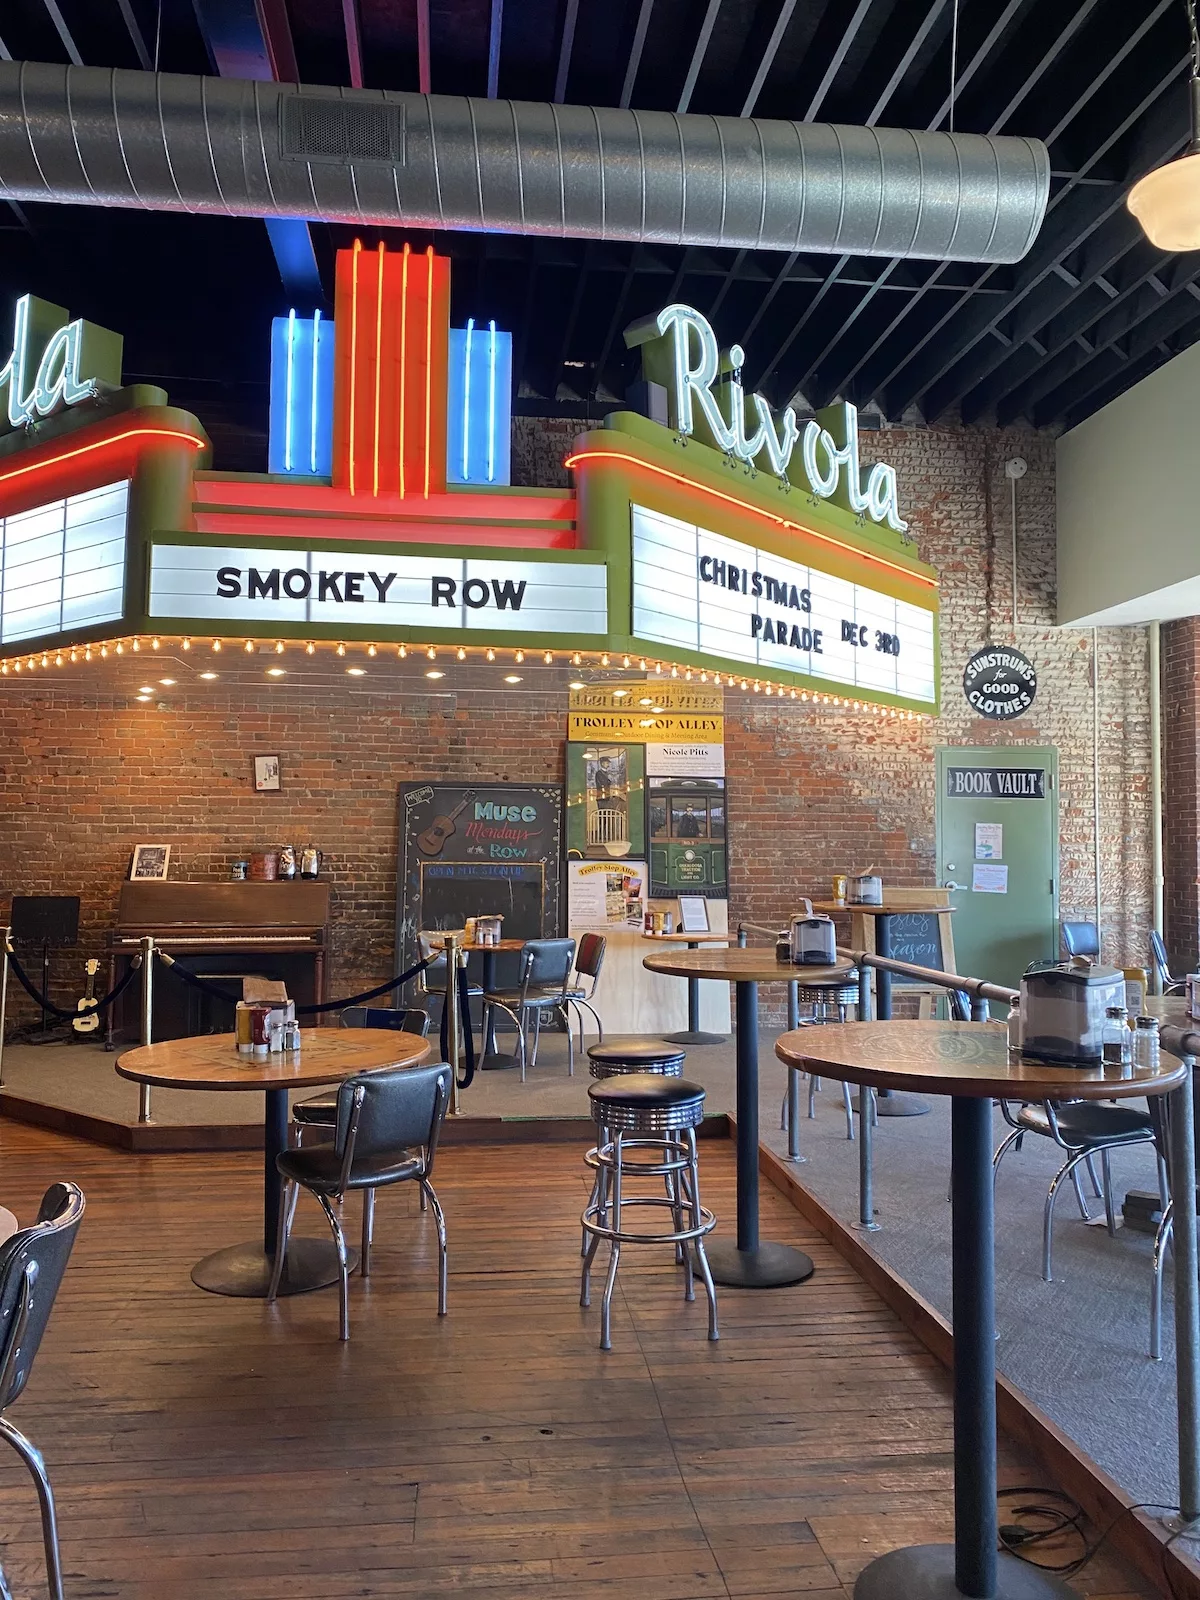 Interior Rivola sign at Smokey Row Coffee in Oskaloosa, Iowa